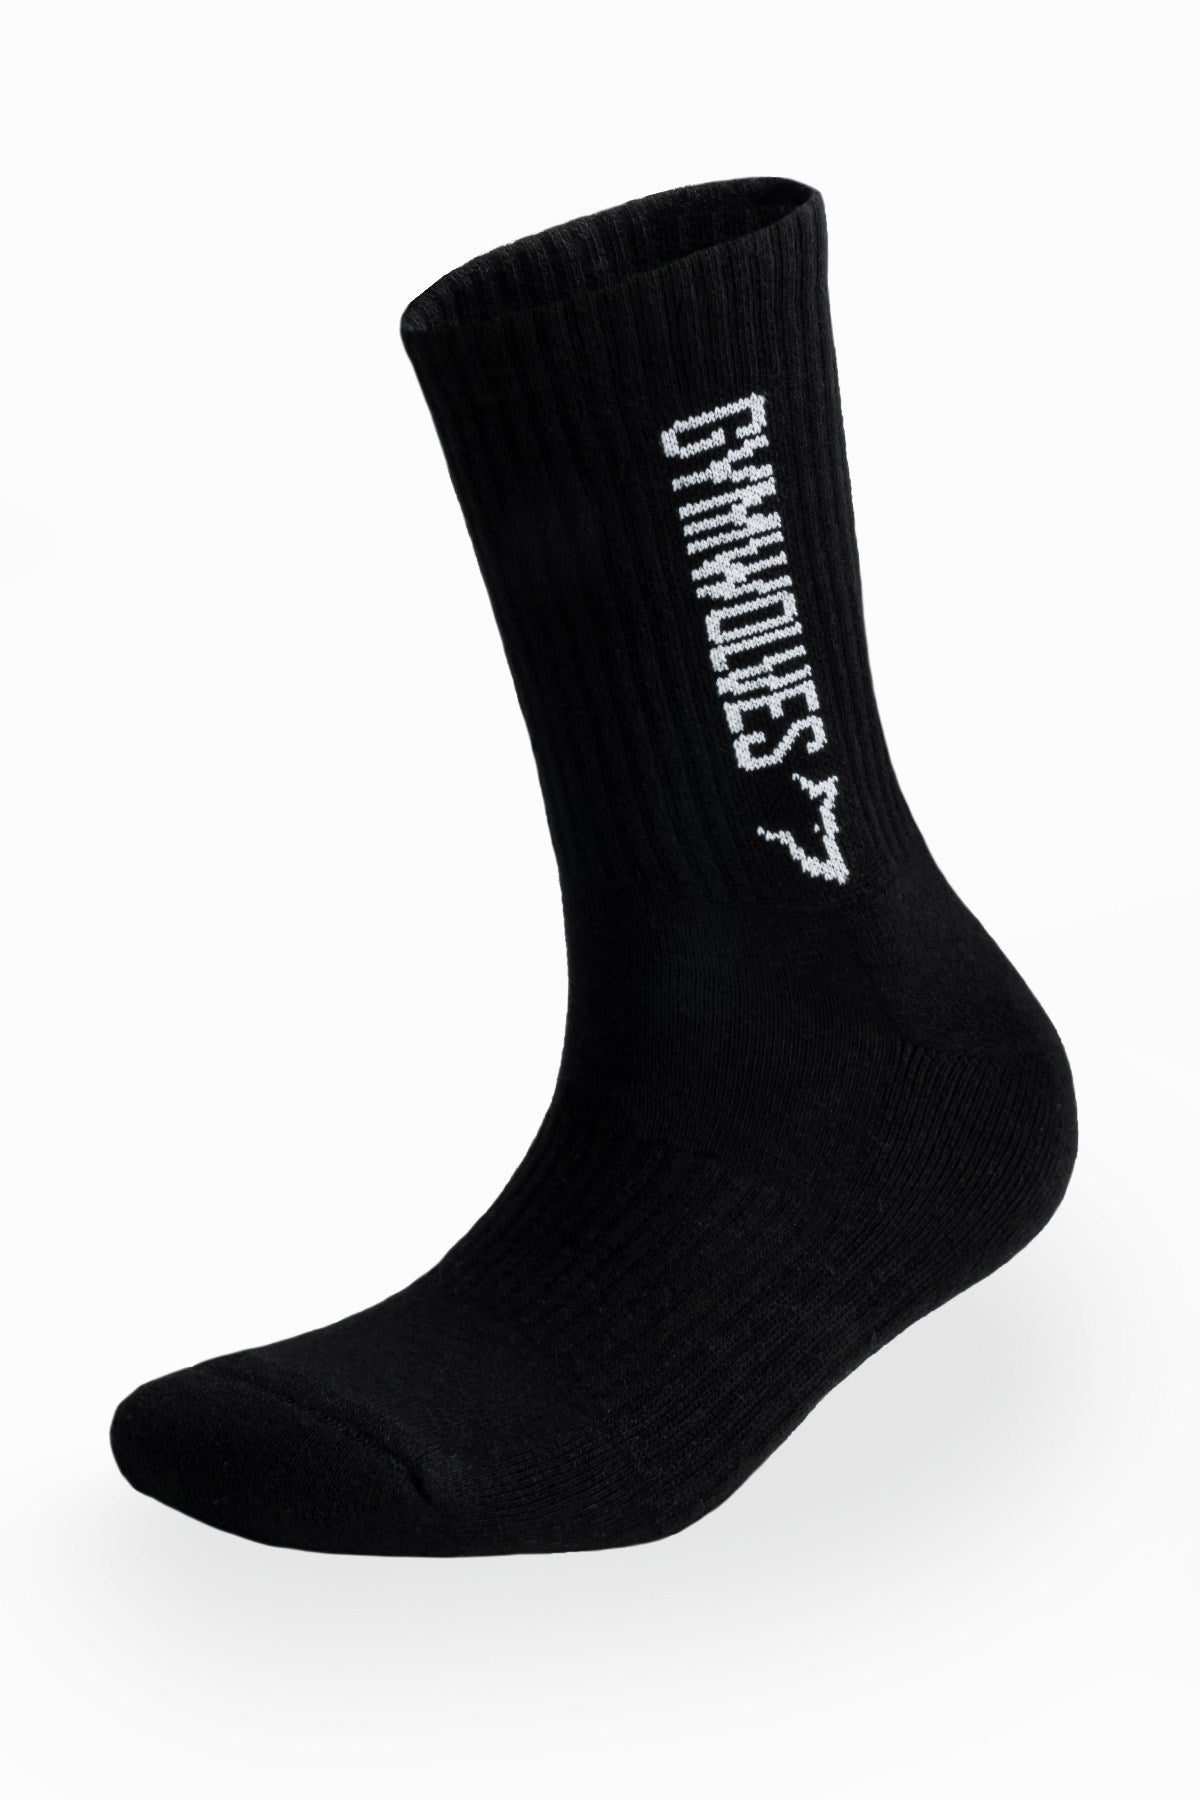 Gymwolves Athletic Sports 3 Socks | Unisex Socks